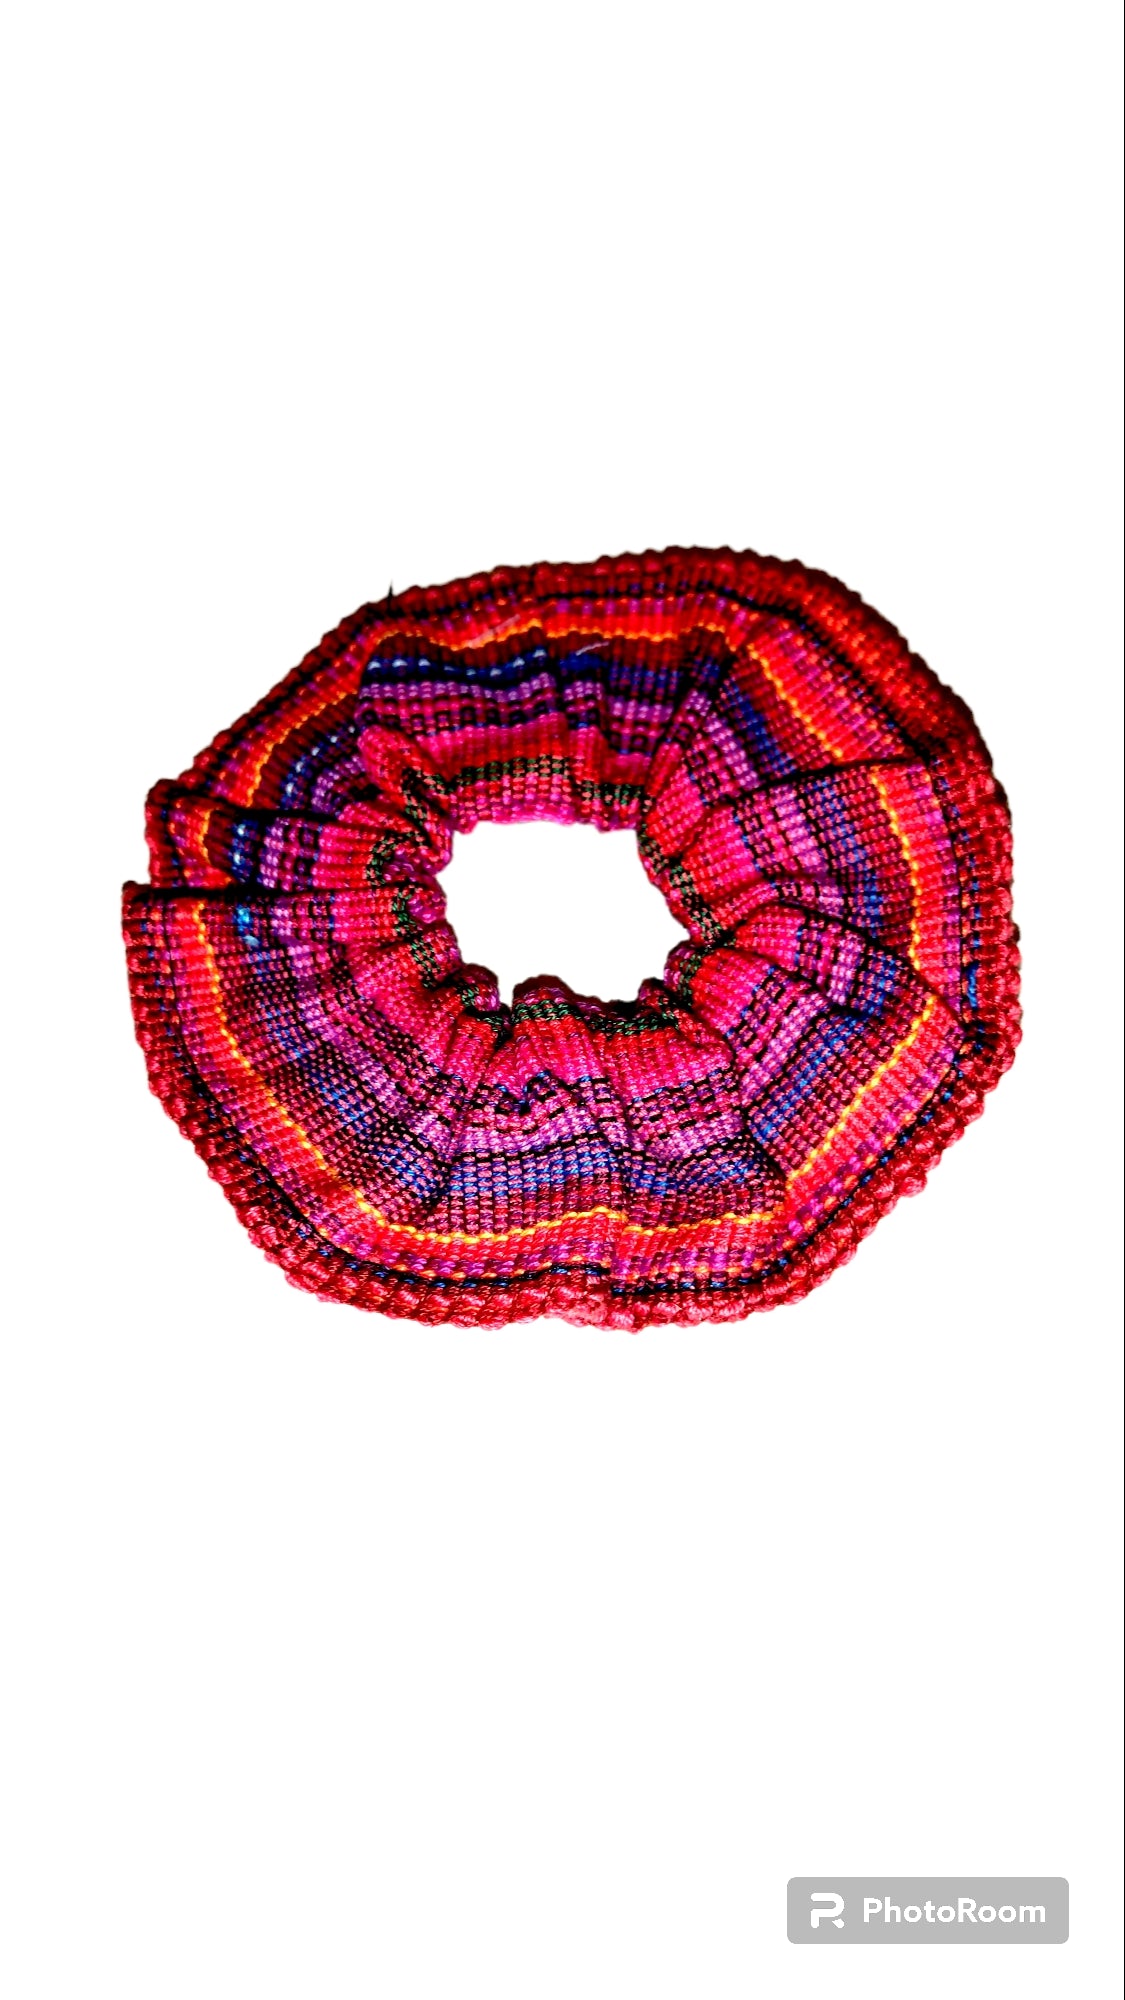 Guatemala Cotton Hair Scrunchies Tie Elastic Woven Multicolored